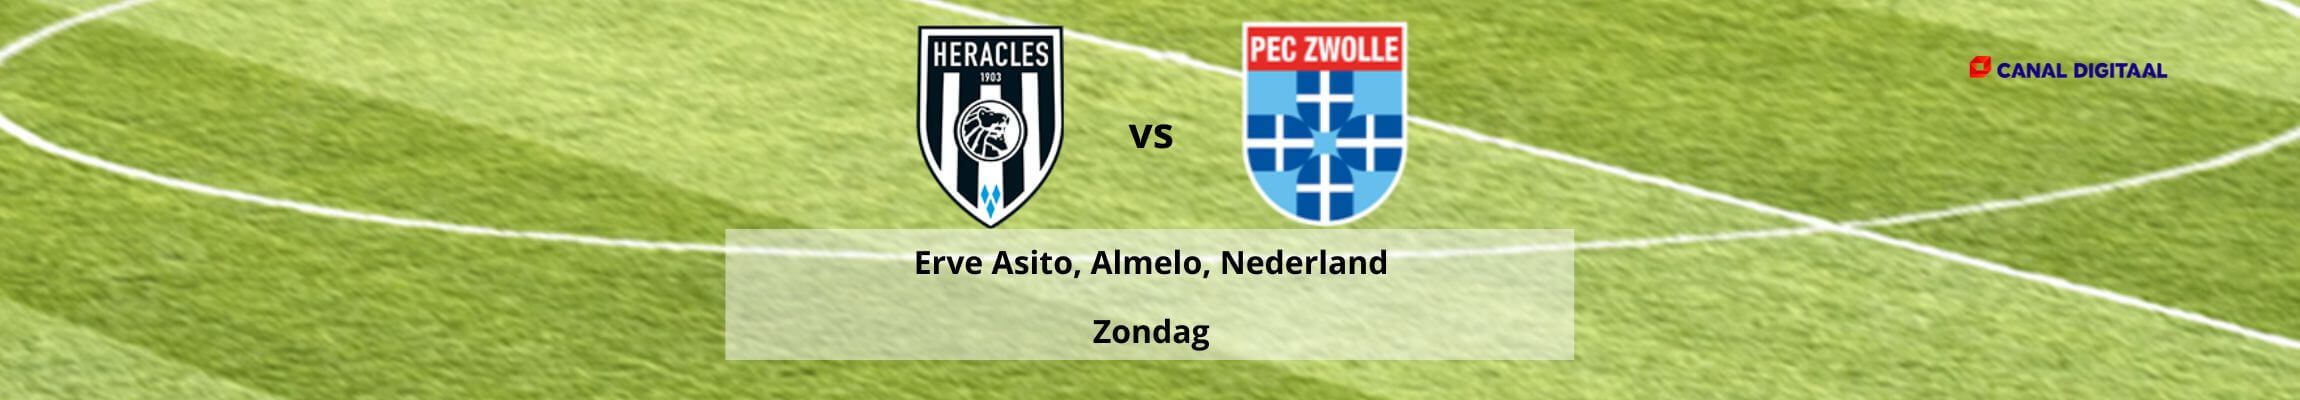 Heracles vs PEC Zwolle